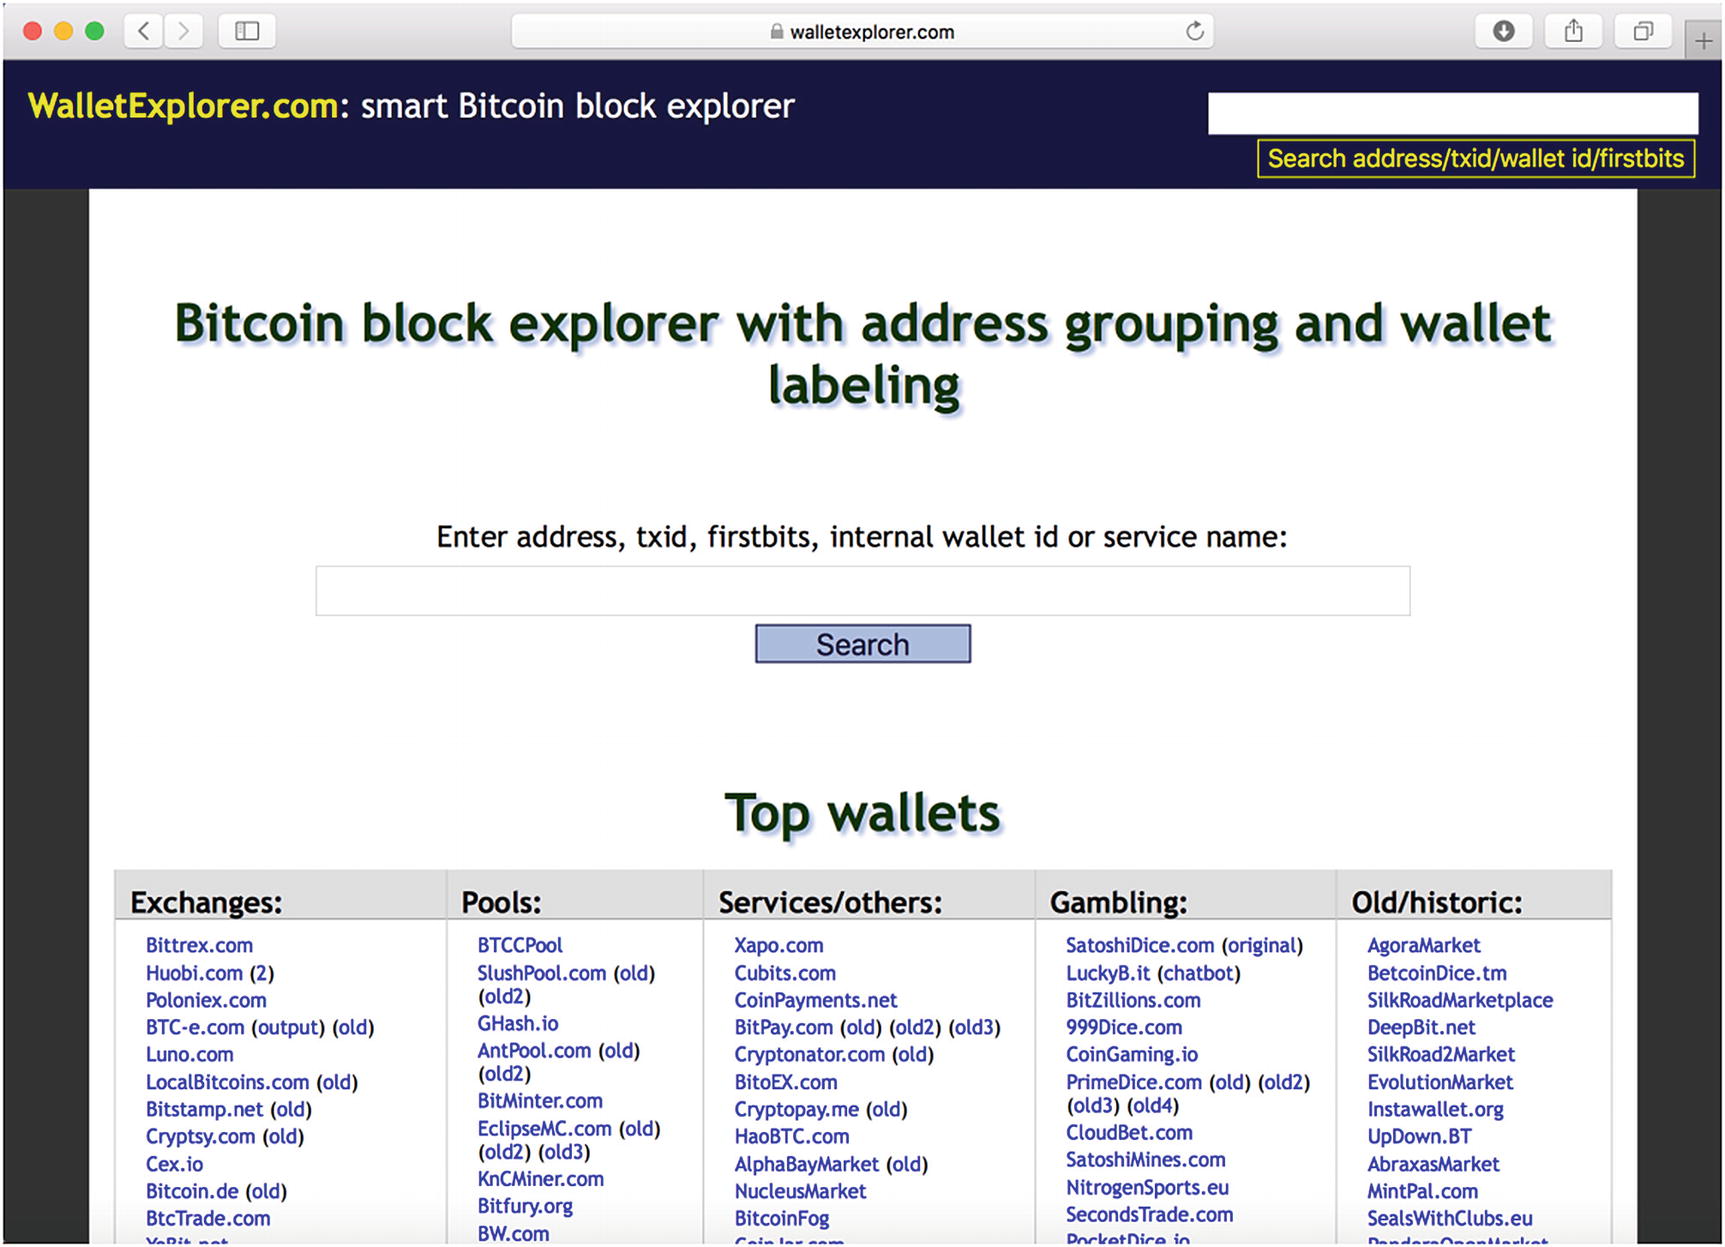 Eclipsemc litecoin wallet crypto trading